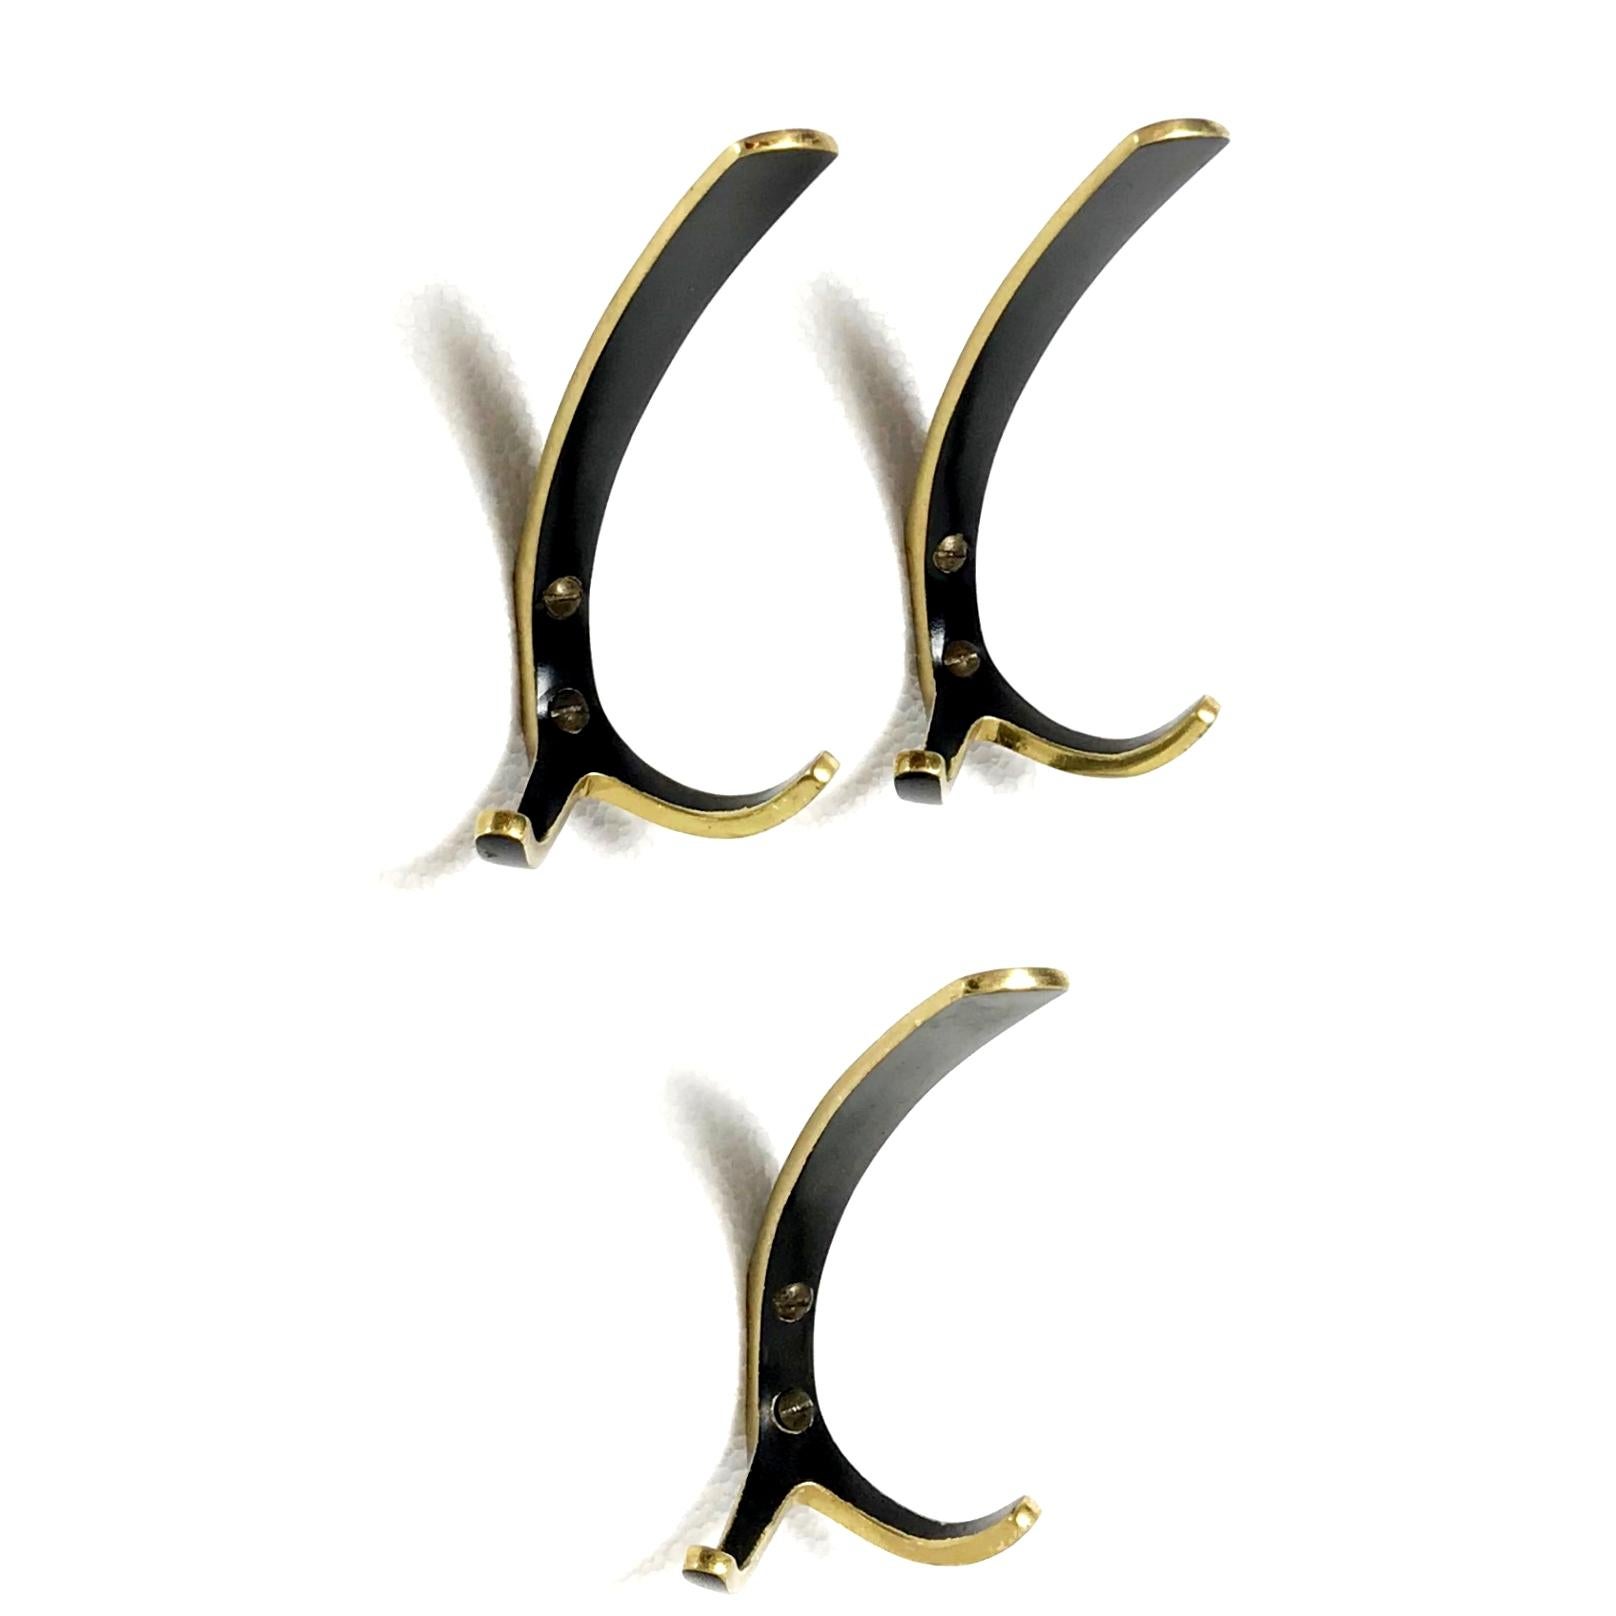 Beautiful Austrian Mid-Century Modern solid brass hooks from the 